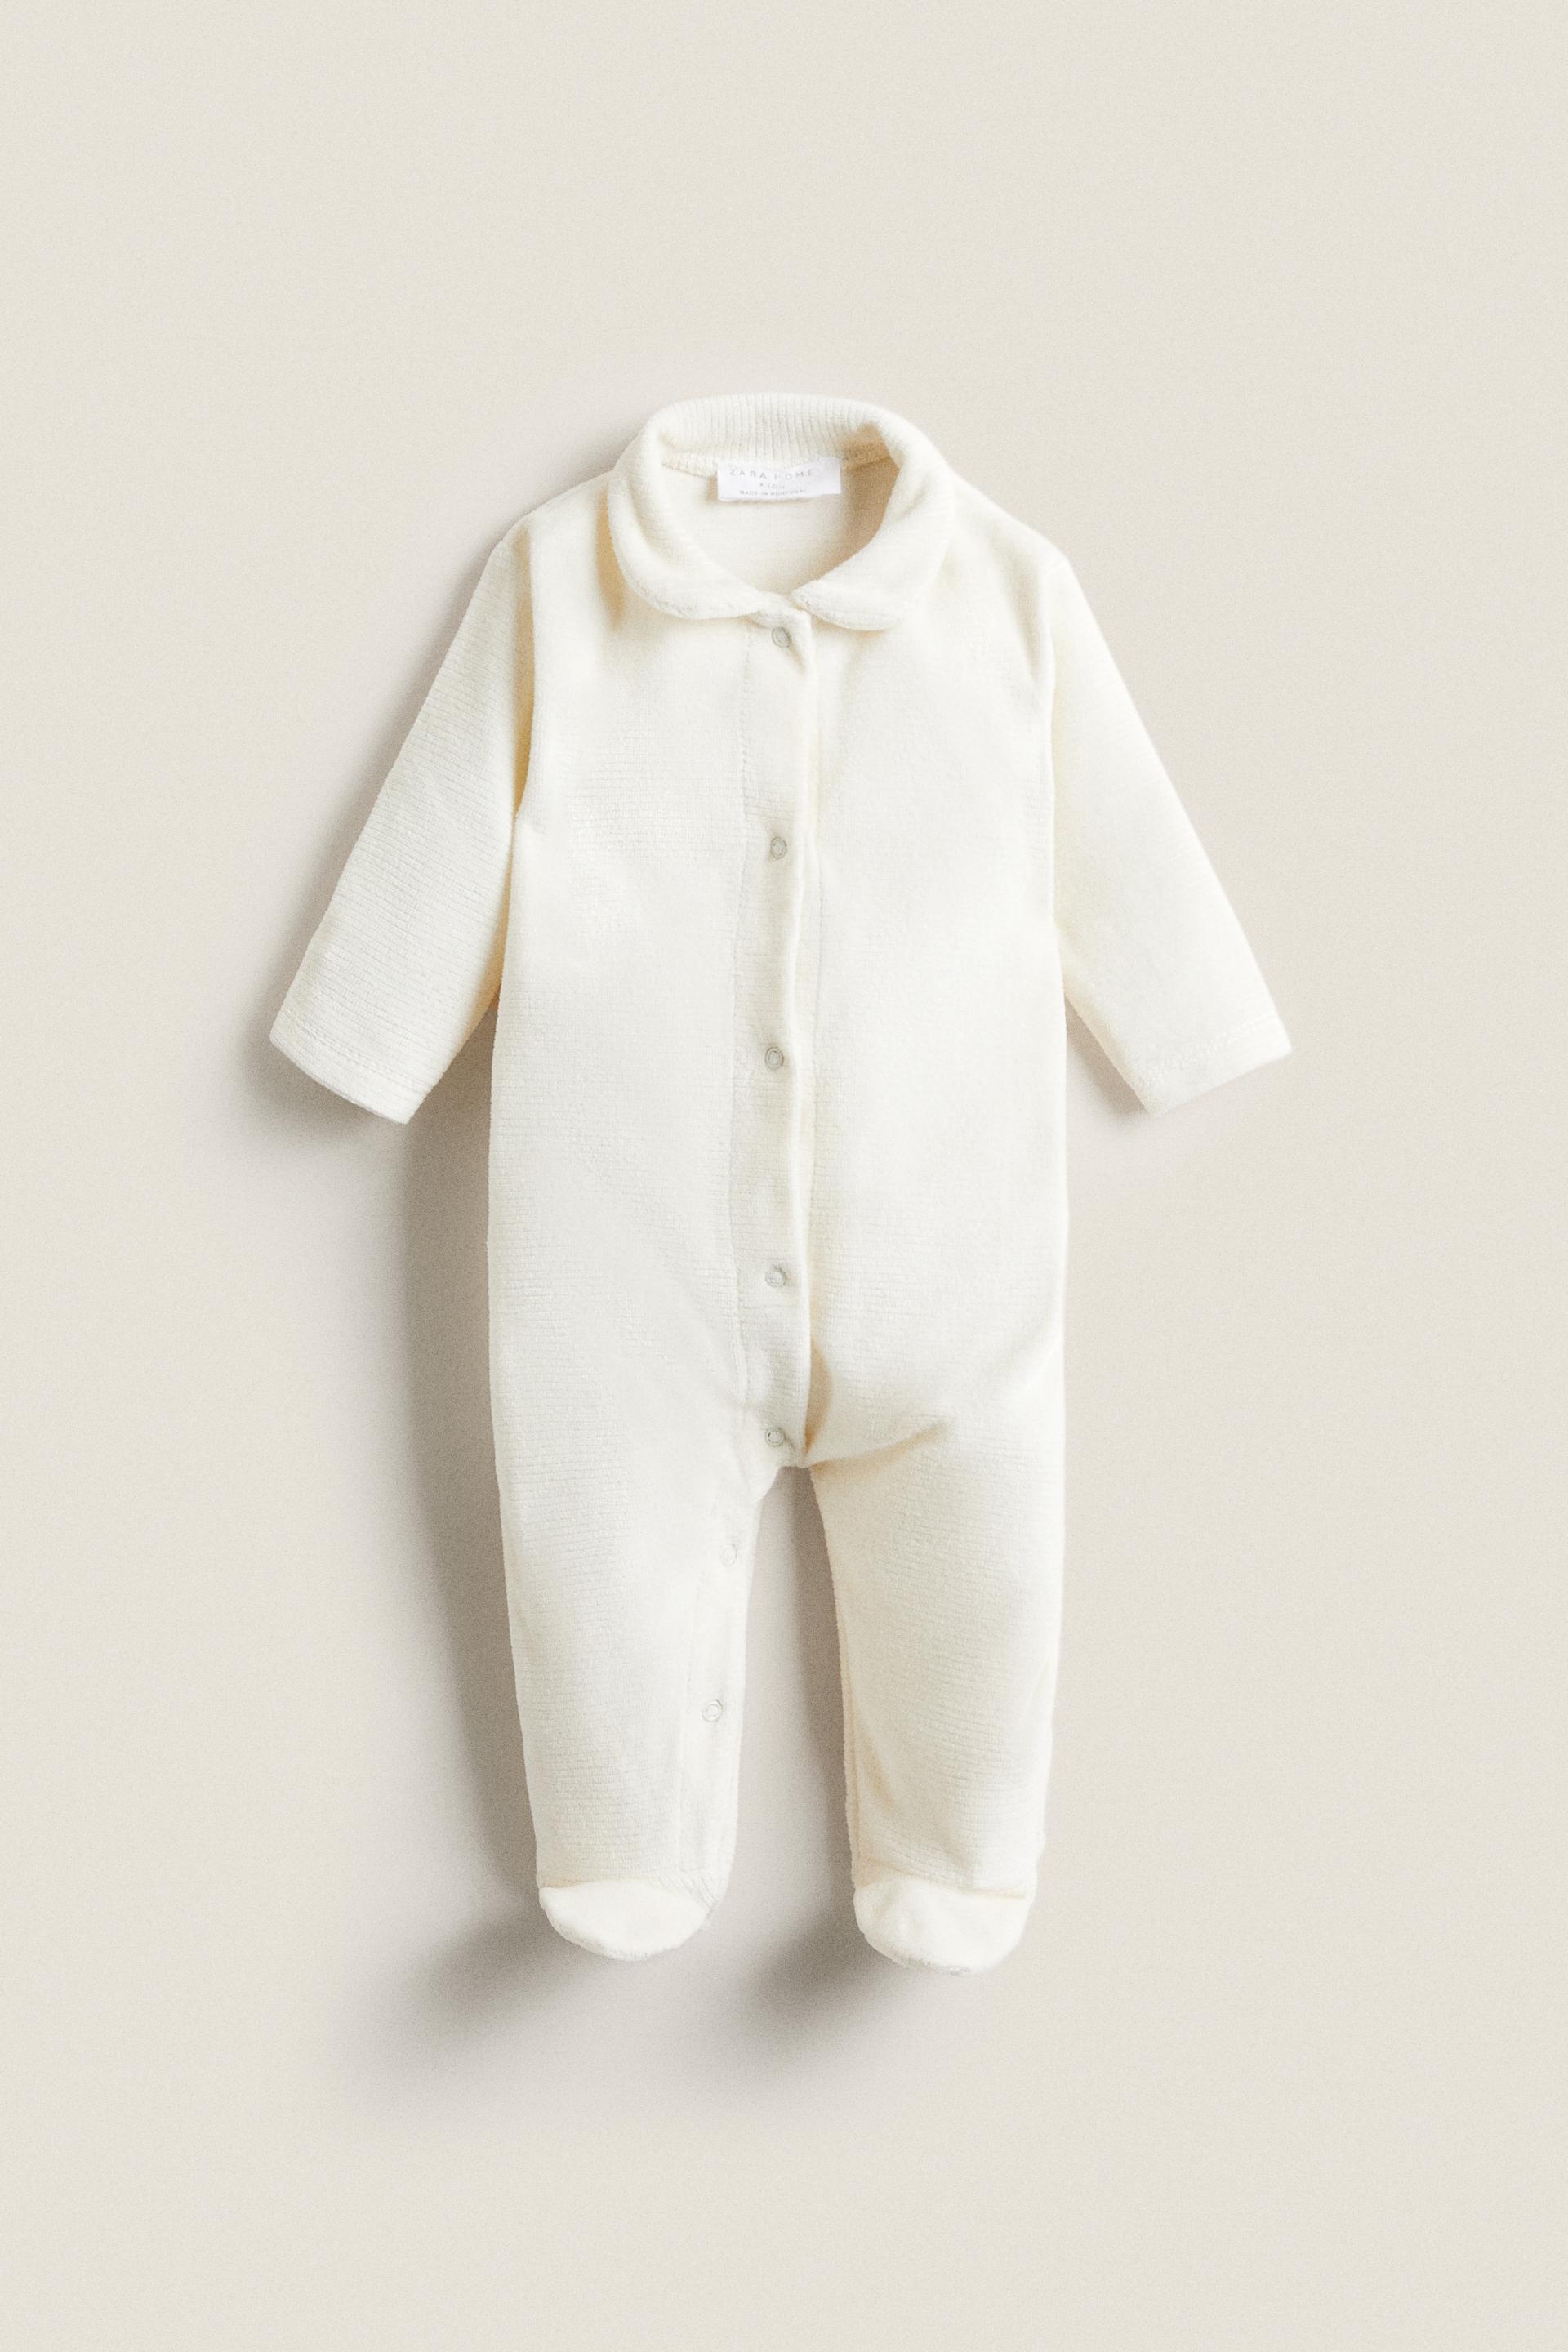 Zara Baby / Toddler Girl White Bodysuit / Top